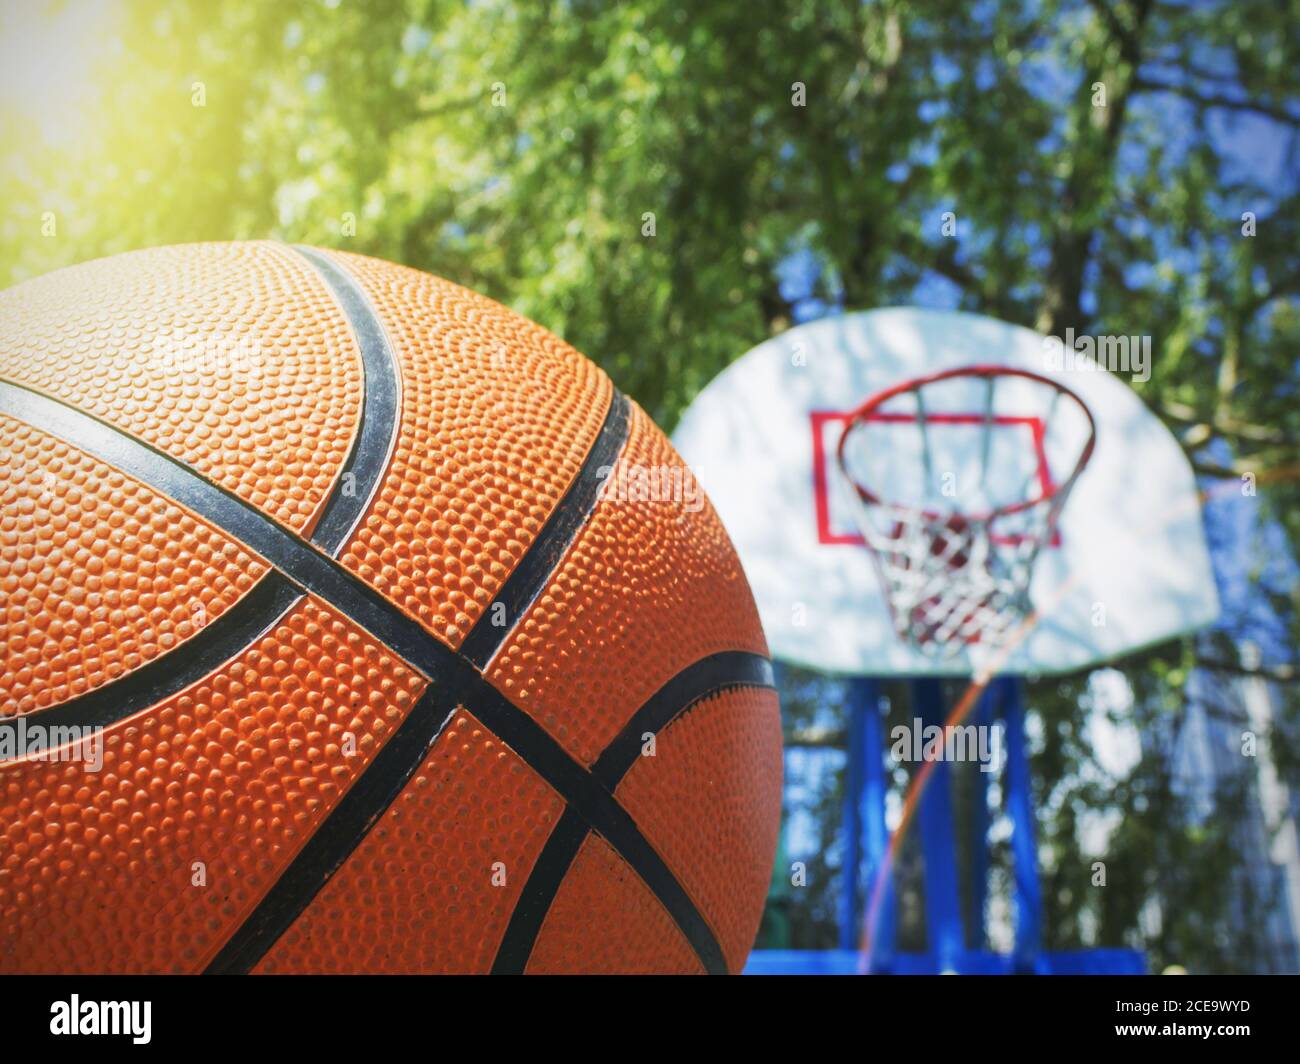 Basketball on a basket background Stock Photo